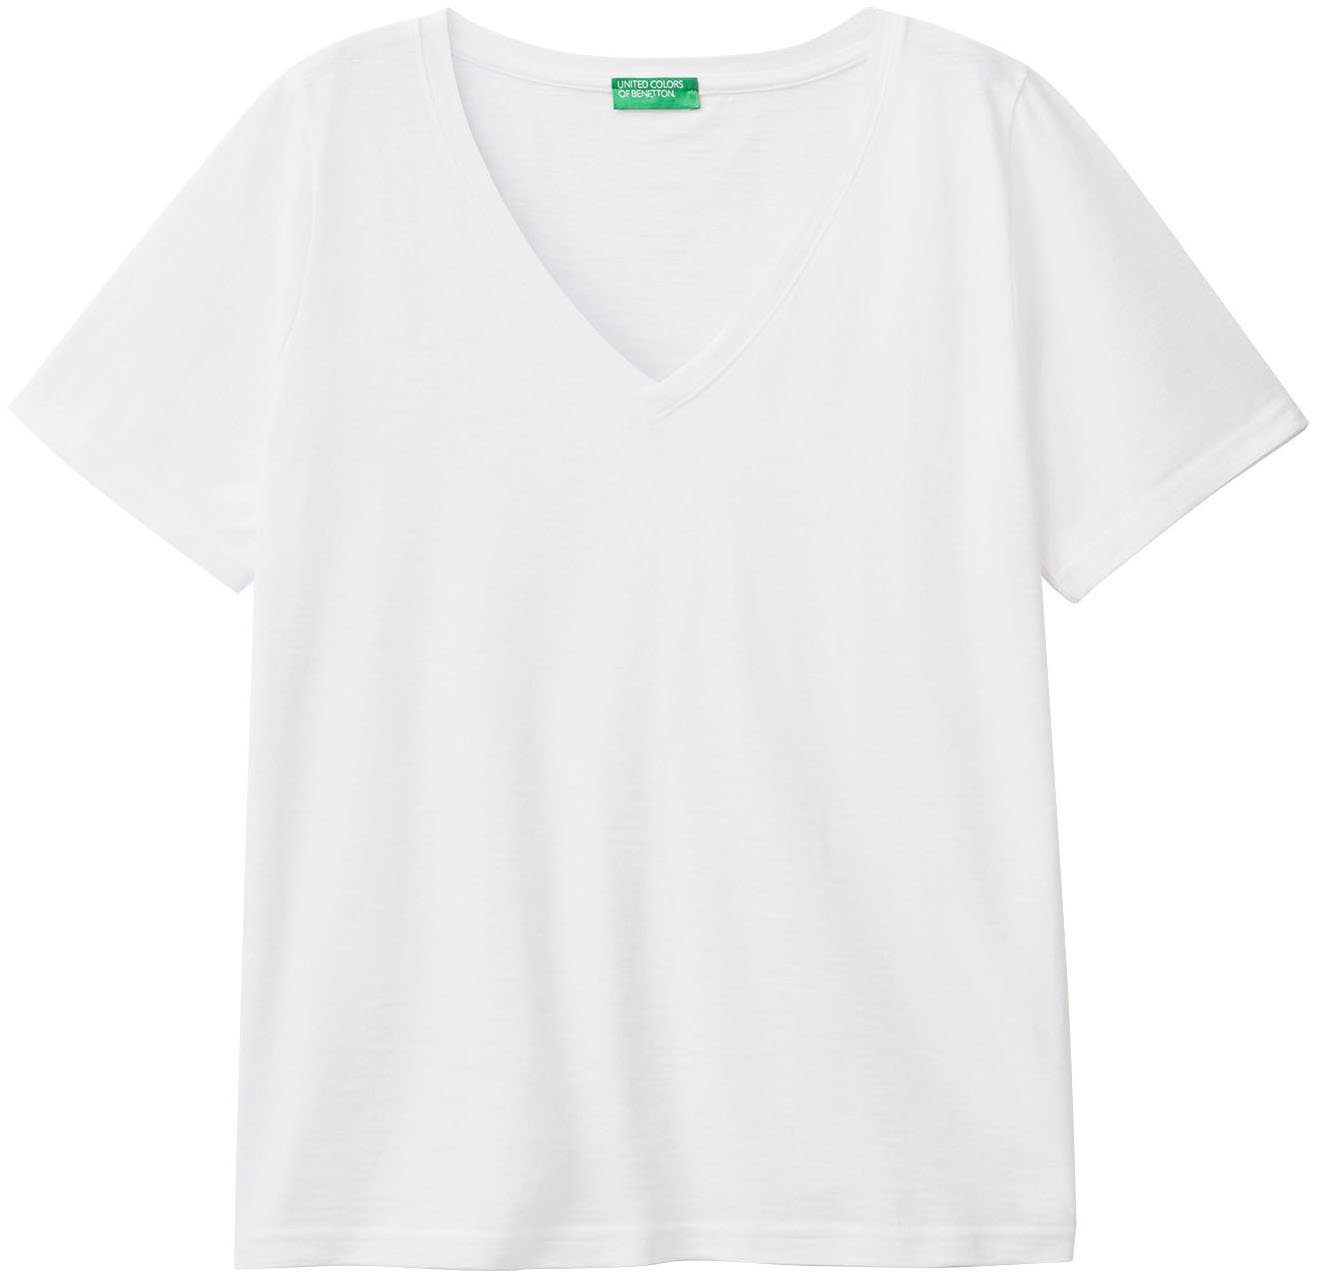 Benetton United Colors aus T-Shirt of Flammgarnjersey wollweiß